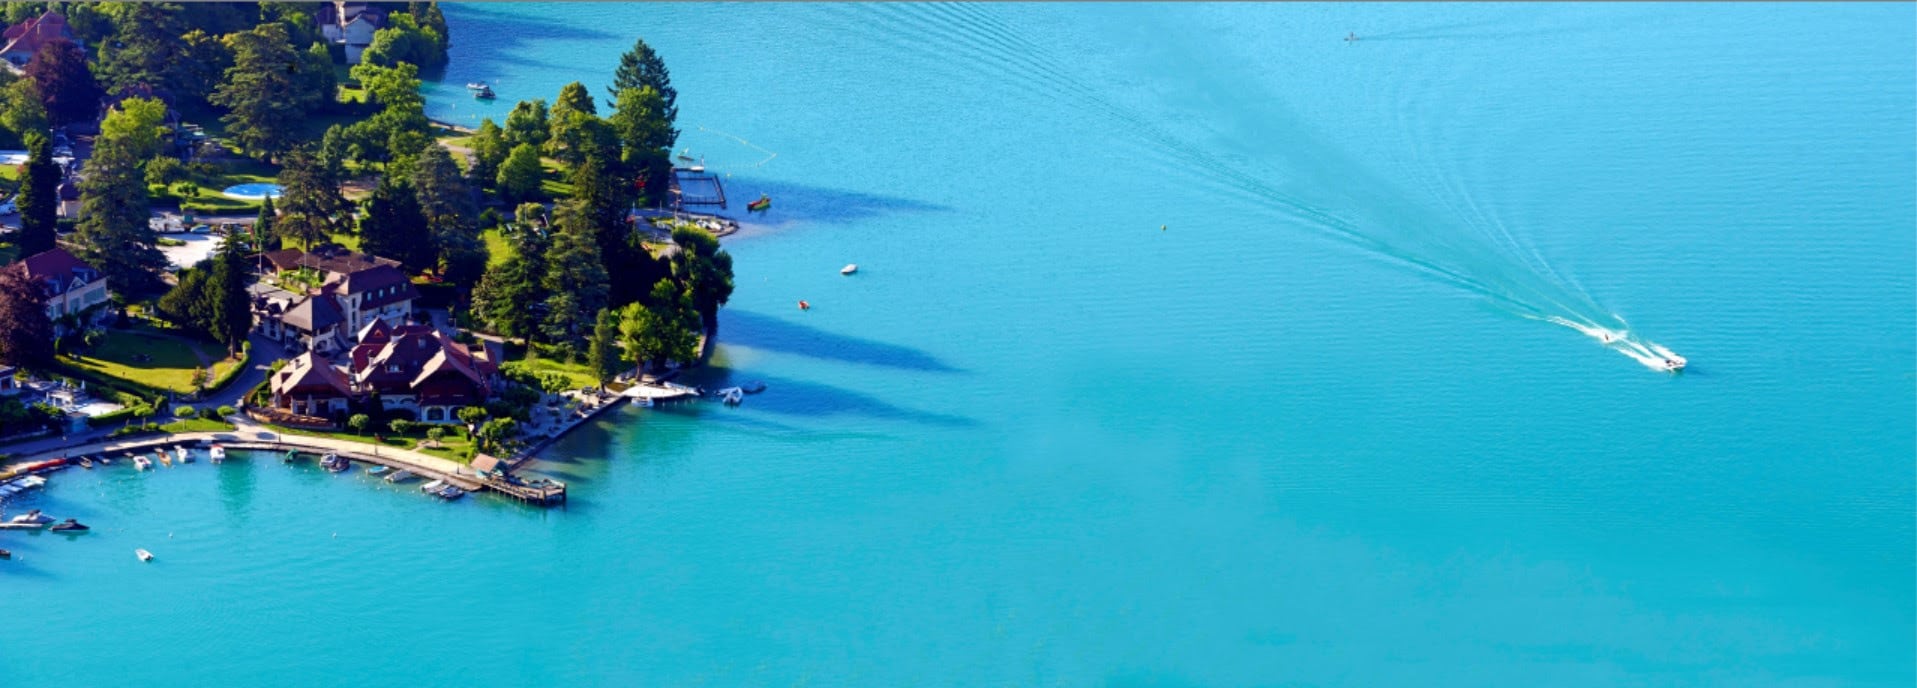 Lac d’Annecy 